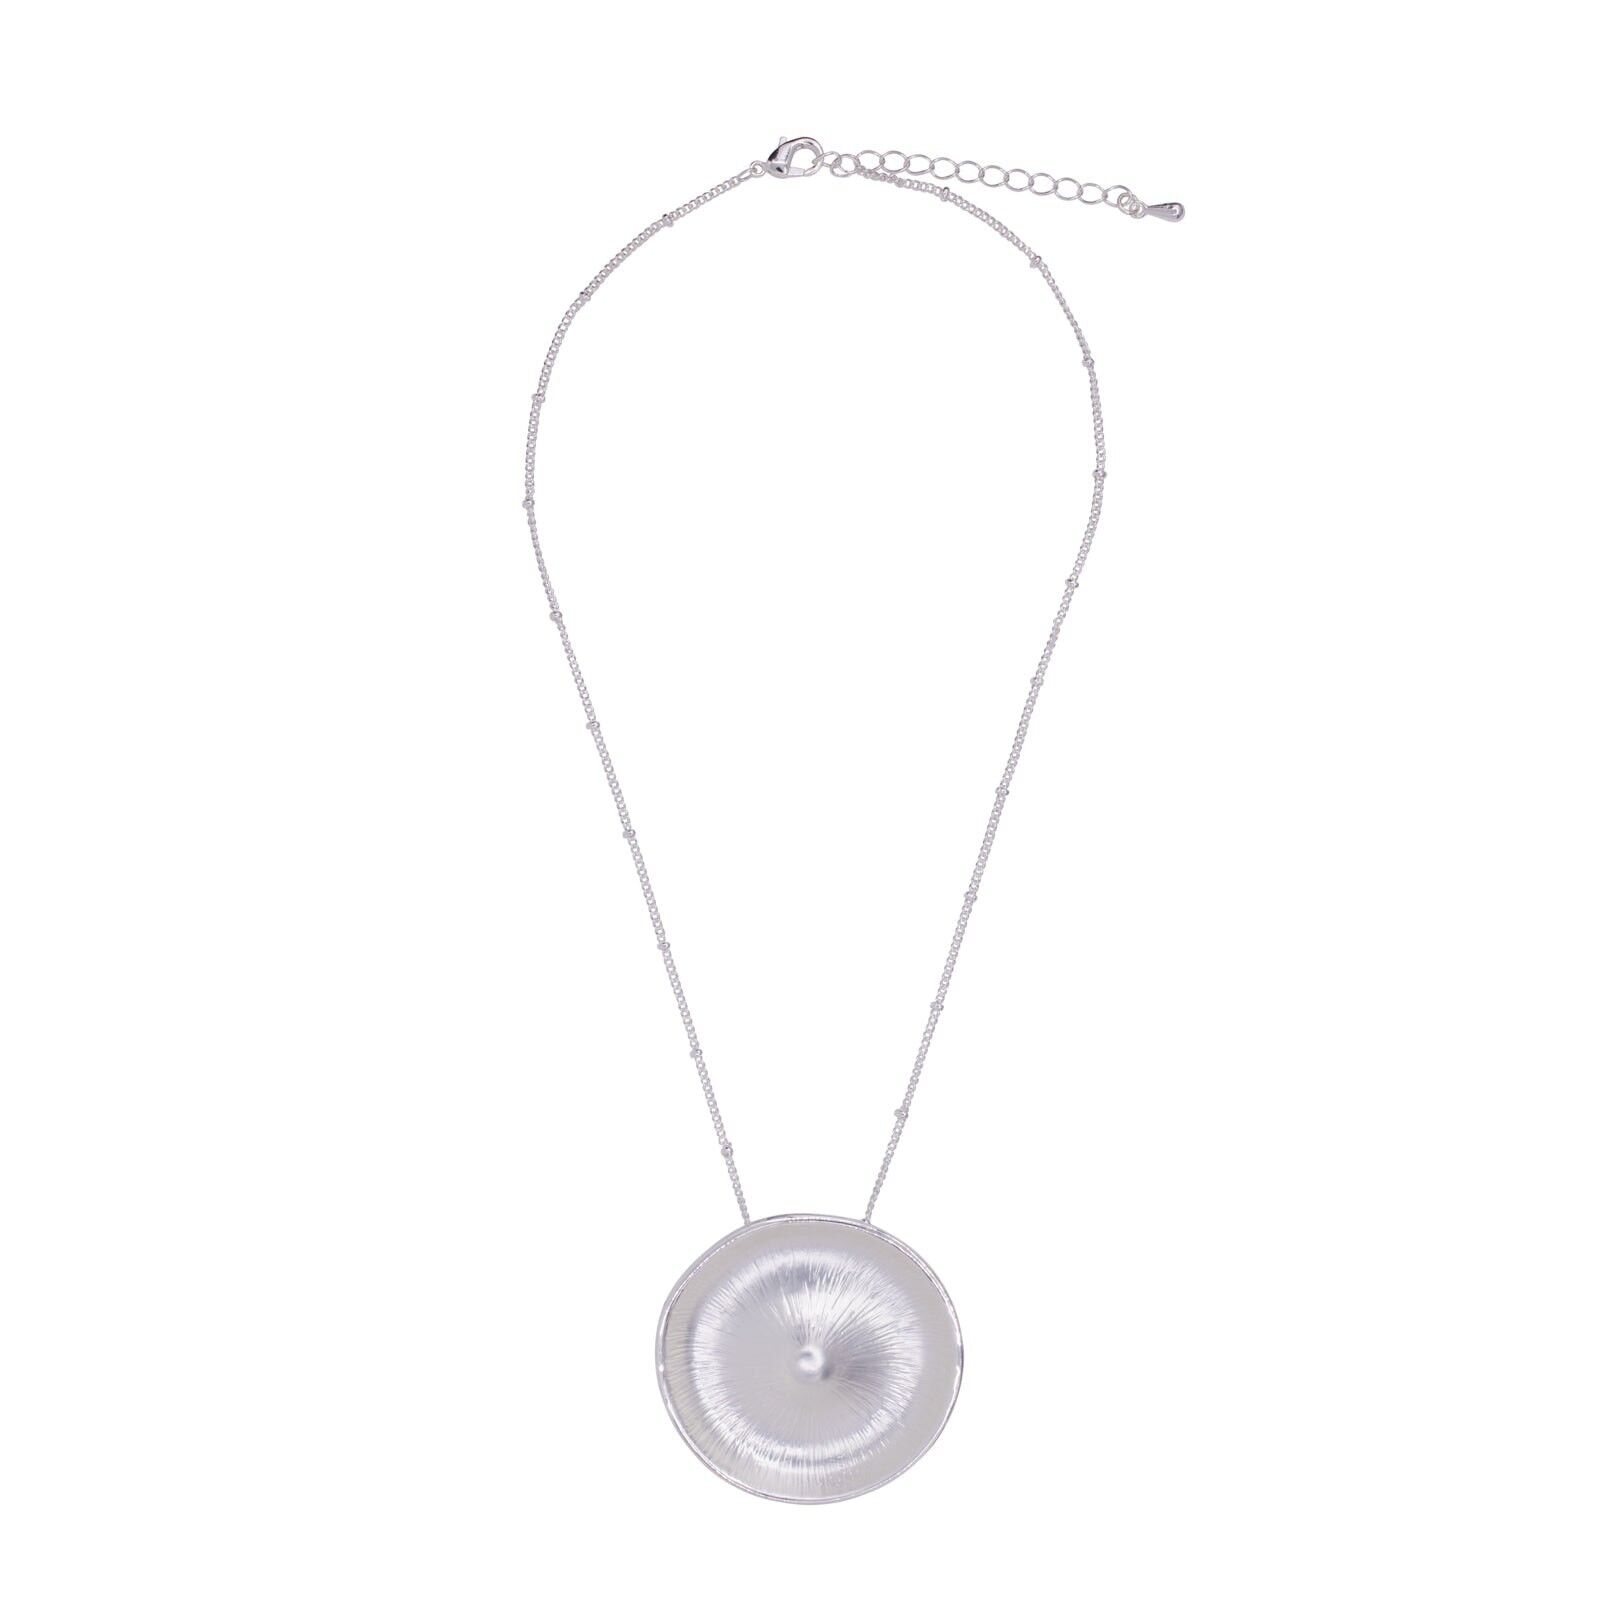 Monet Silver Tassel Necklace - Garden Party Collection Vintage Jewelry |  Vintage jewelry, Jewelry, Necklace